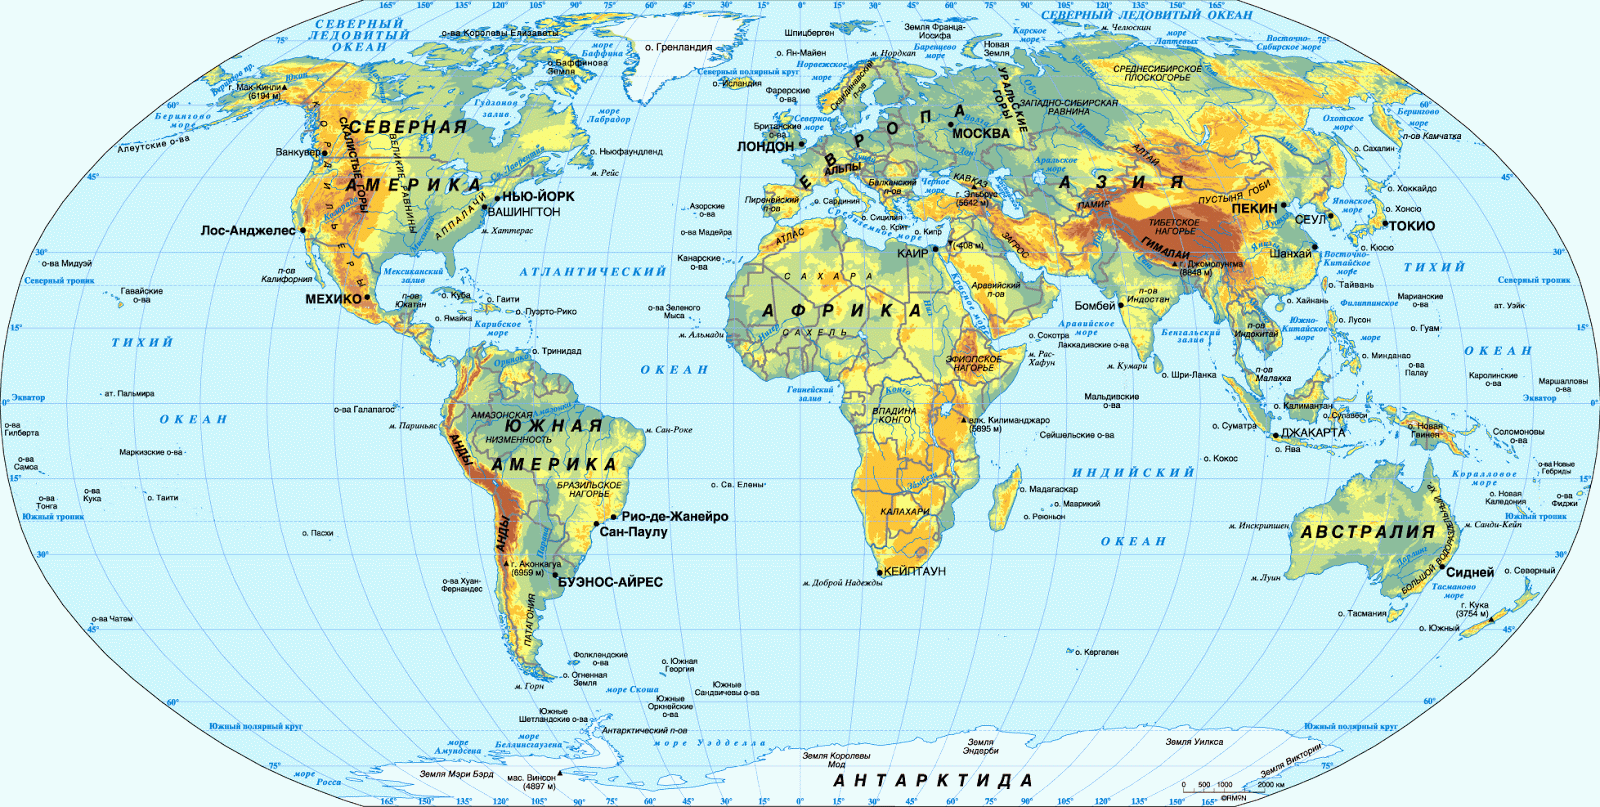 Fondos de Pantalla Mapa del Mundo | Fondos de Pantalla Imagenes